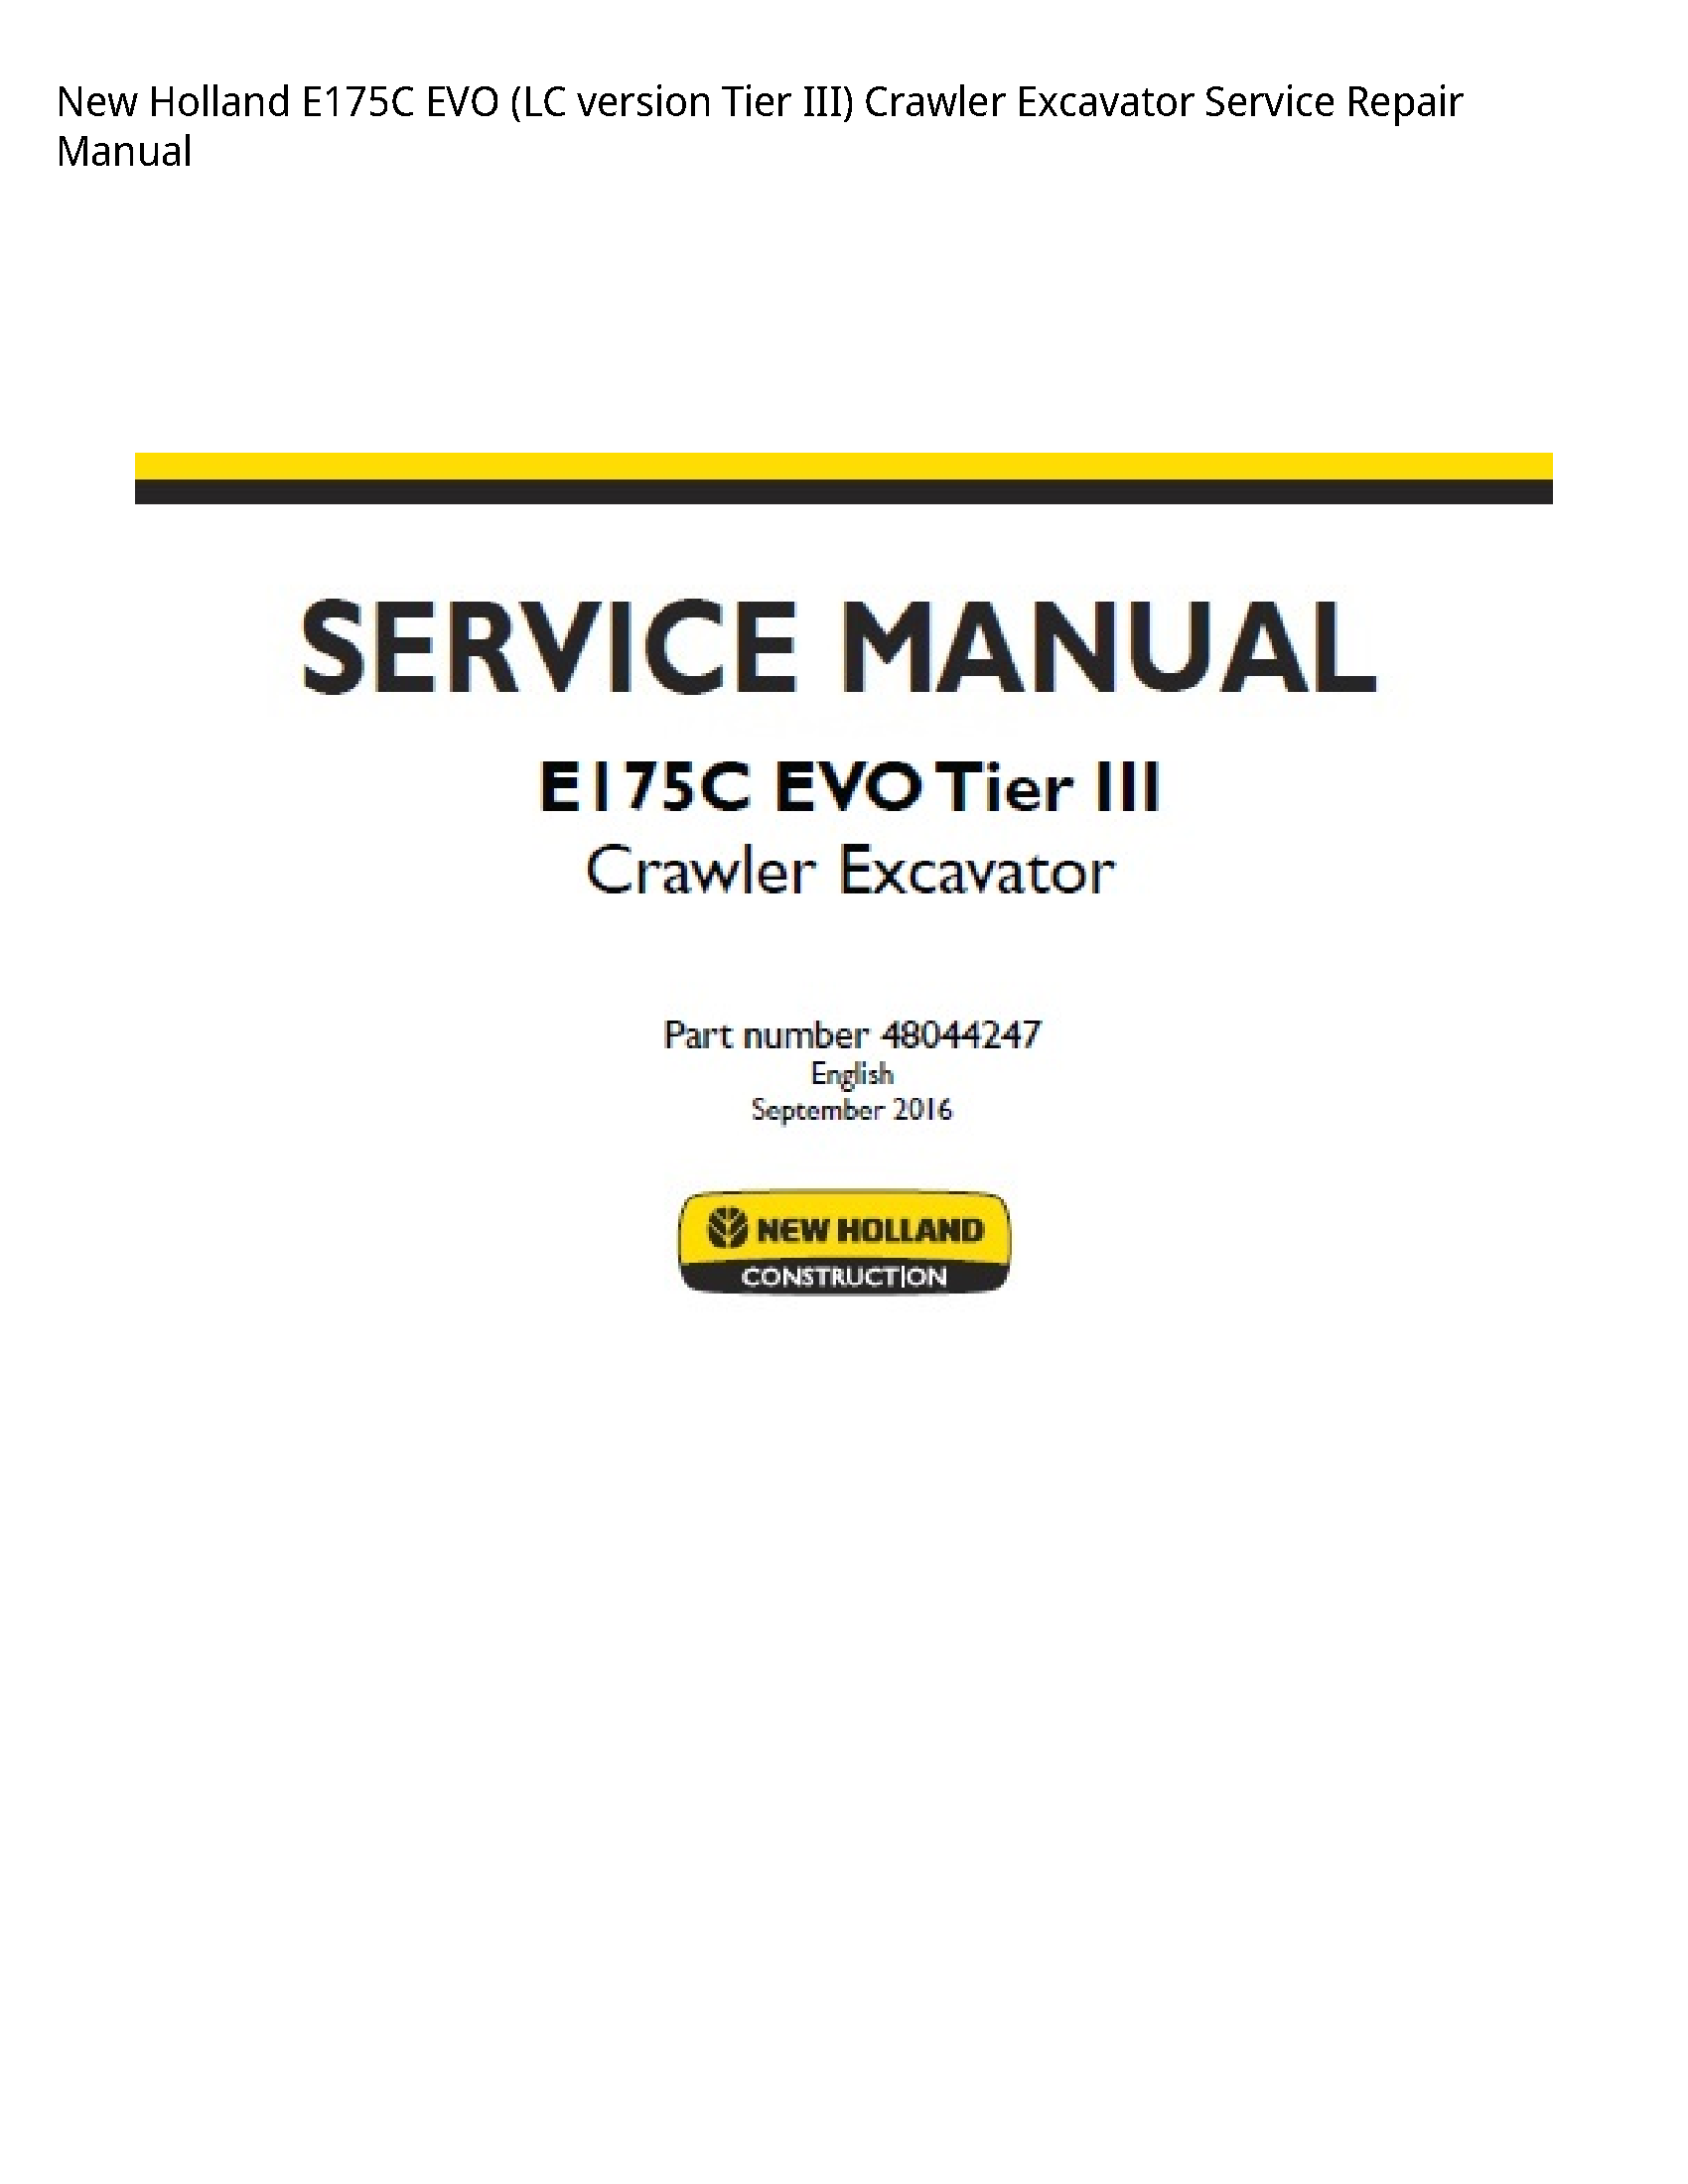 New Holland E175C EVO (LC version Tier III) Crawler Excavator manual